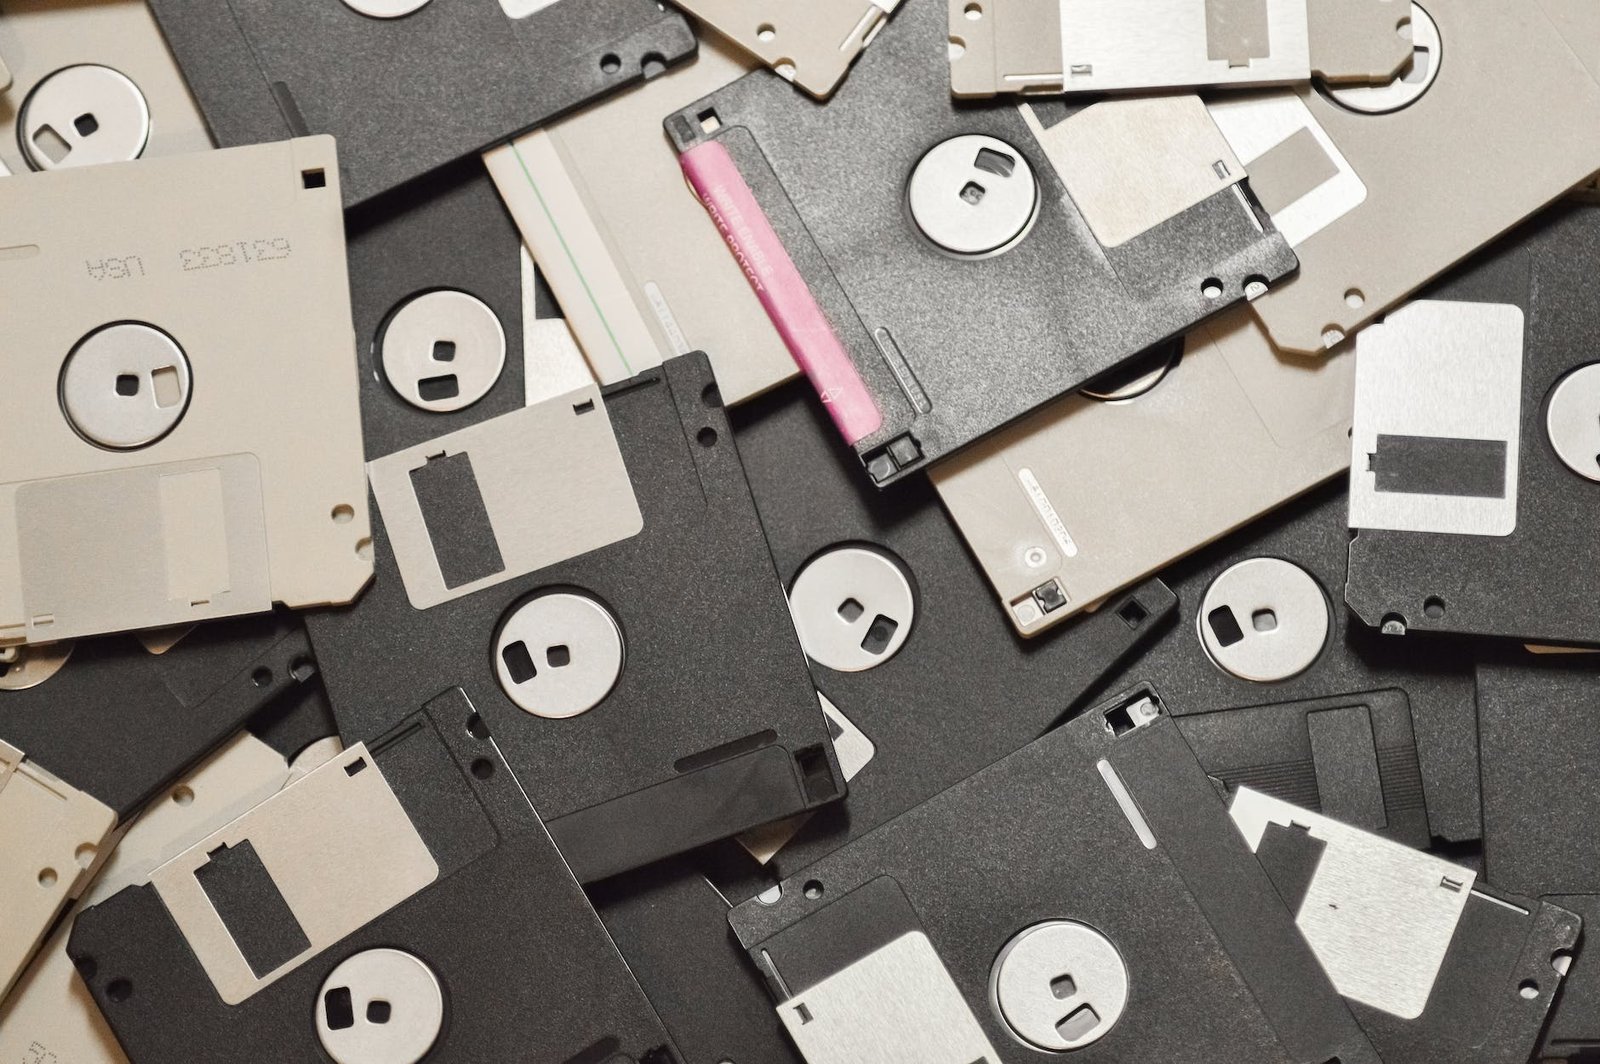 assorted floppy disks